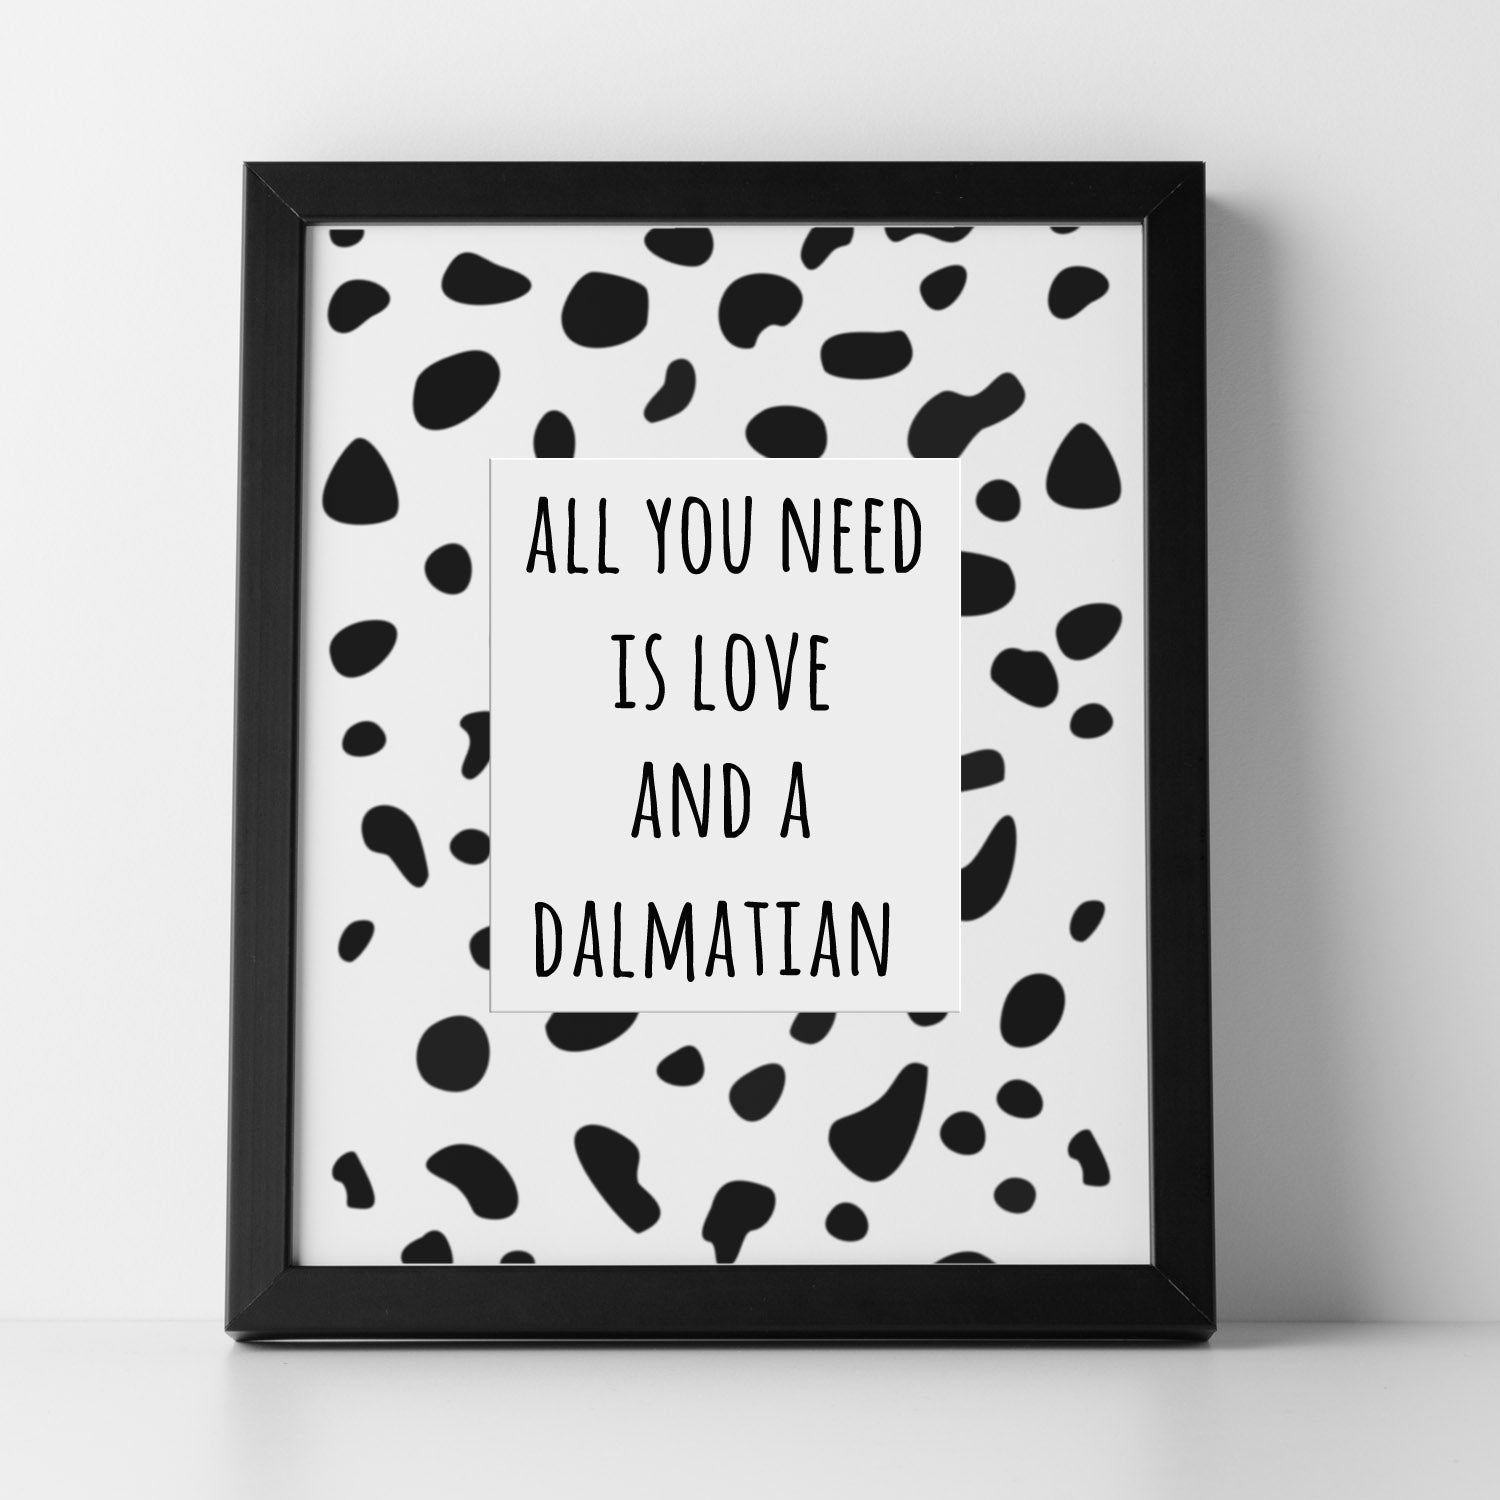 CraftStar Dalmatian Print Stencil as a framed picture